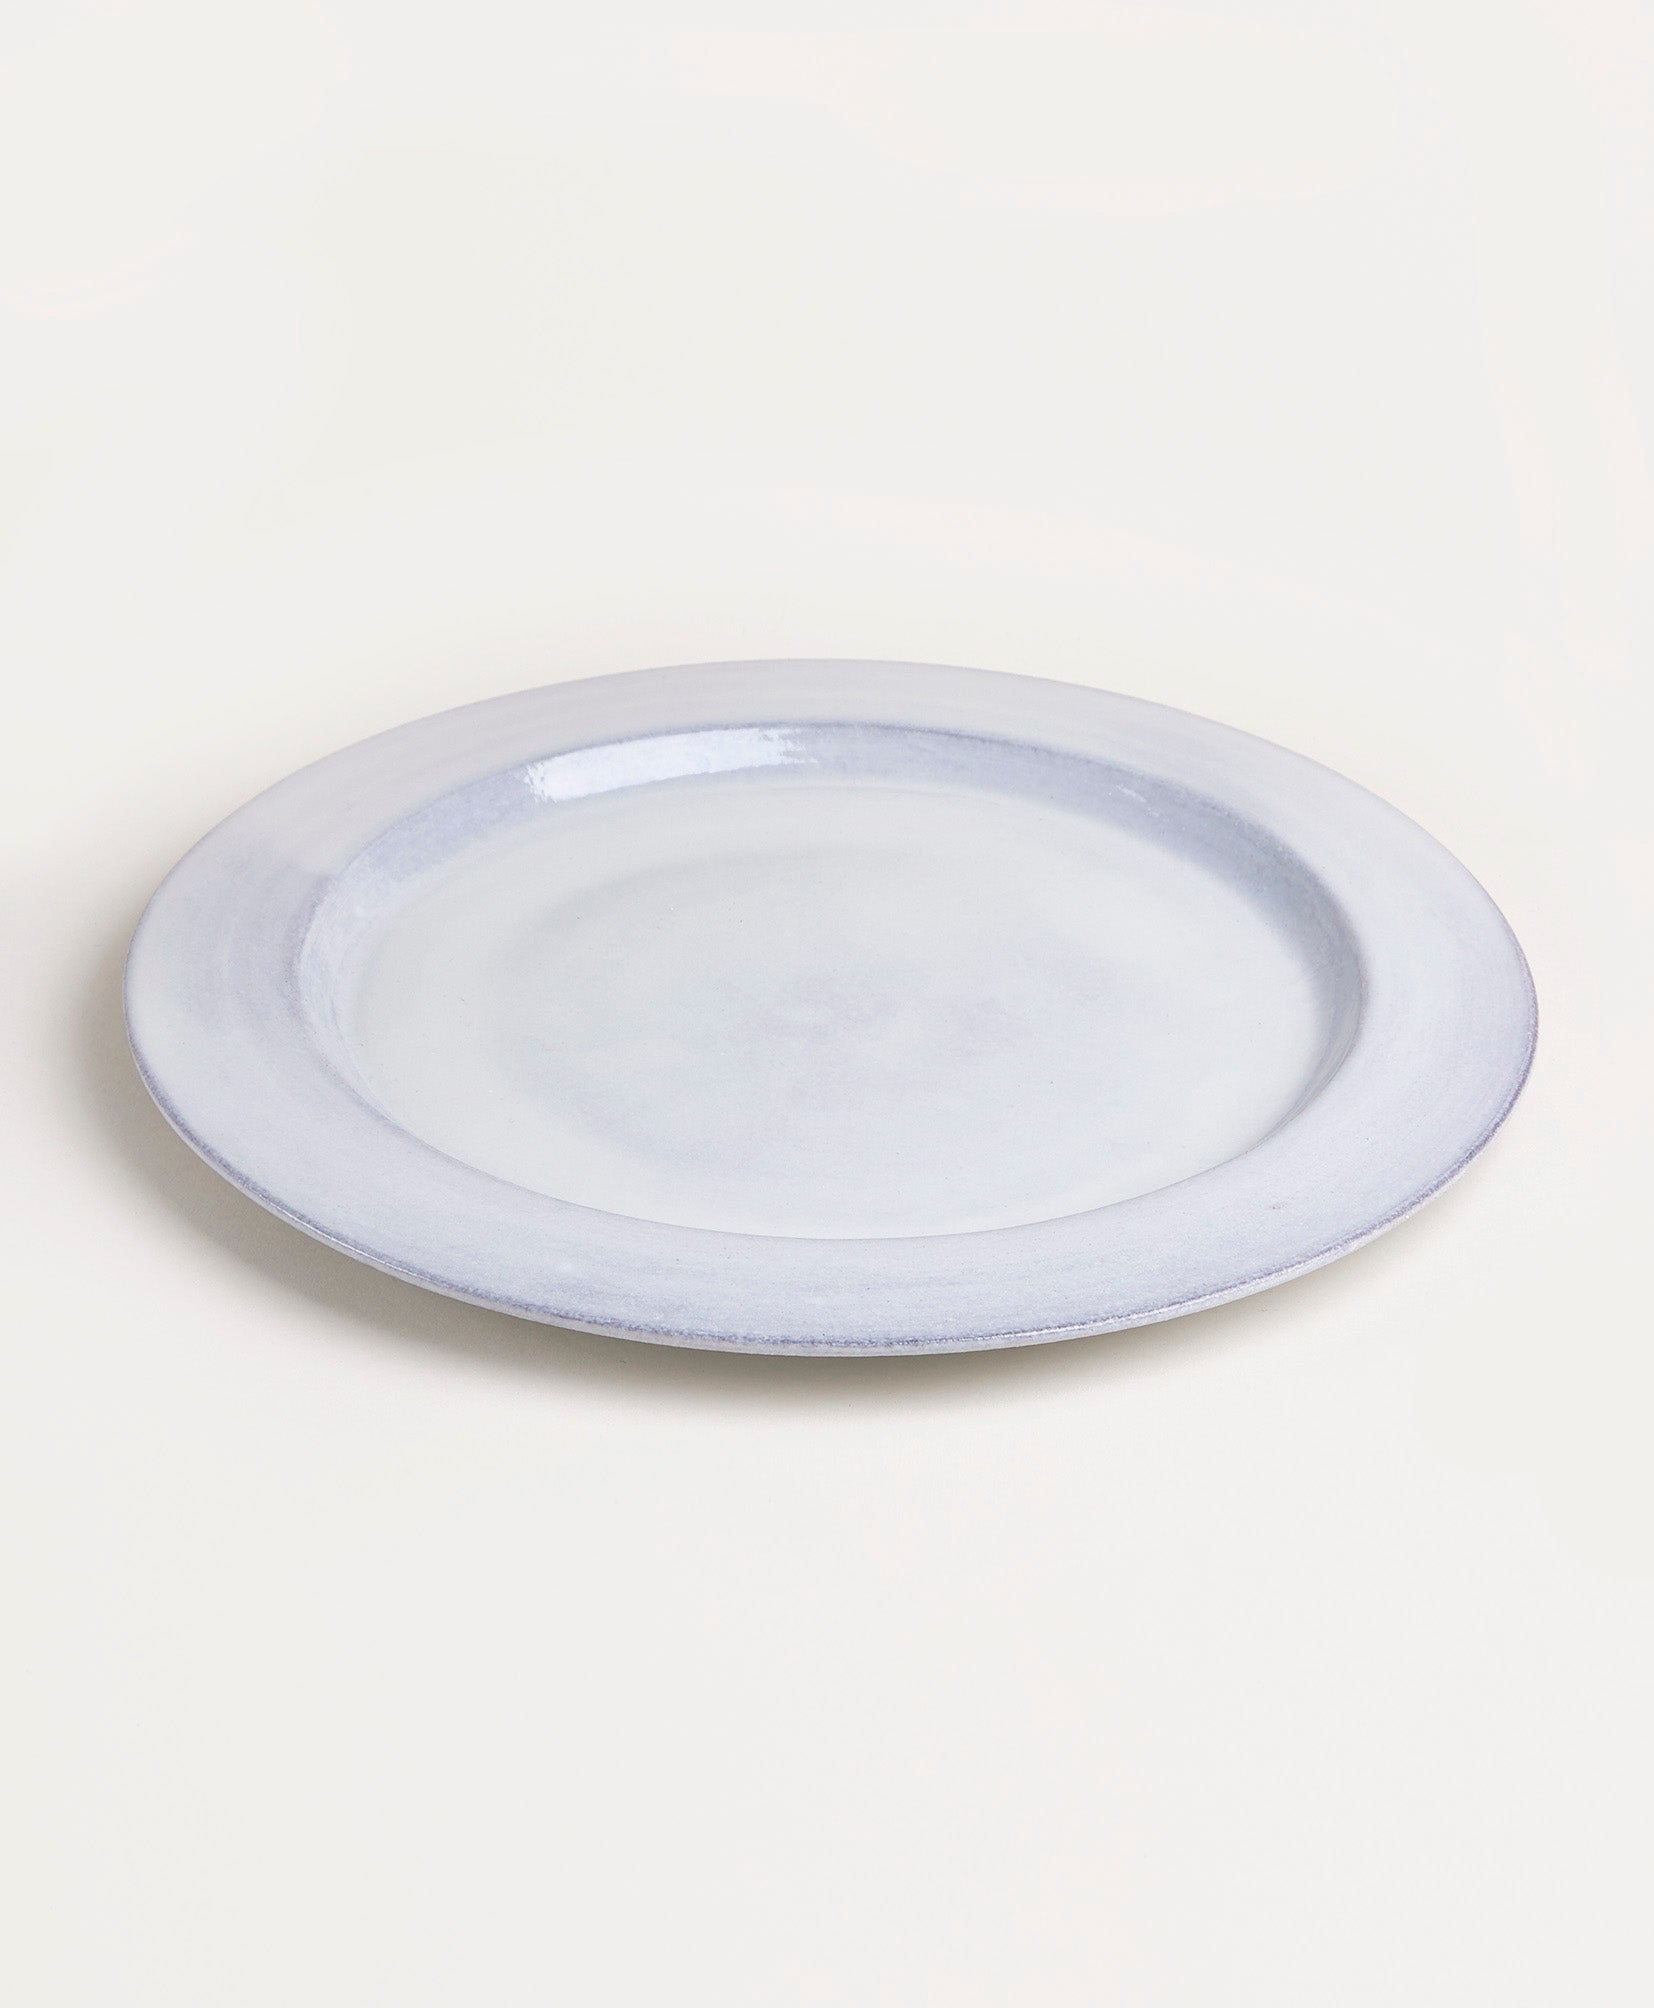   Customized Rimmed Dinner Plate  